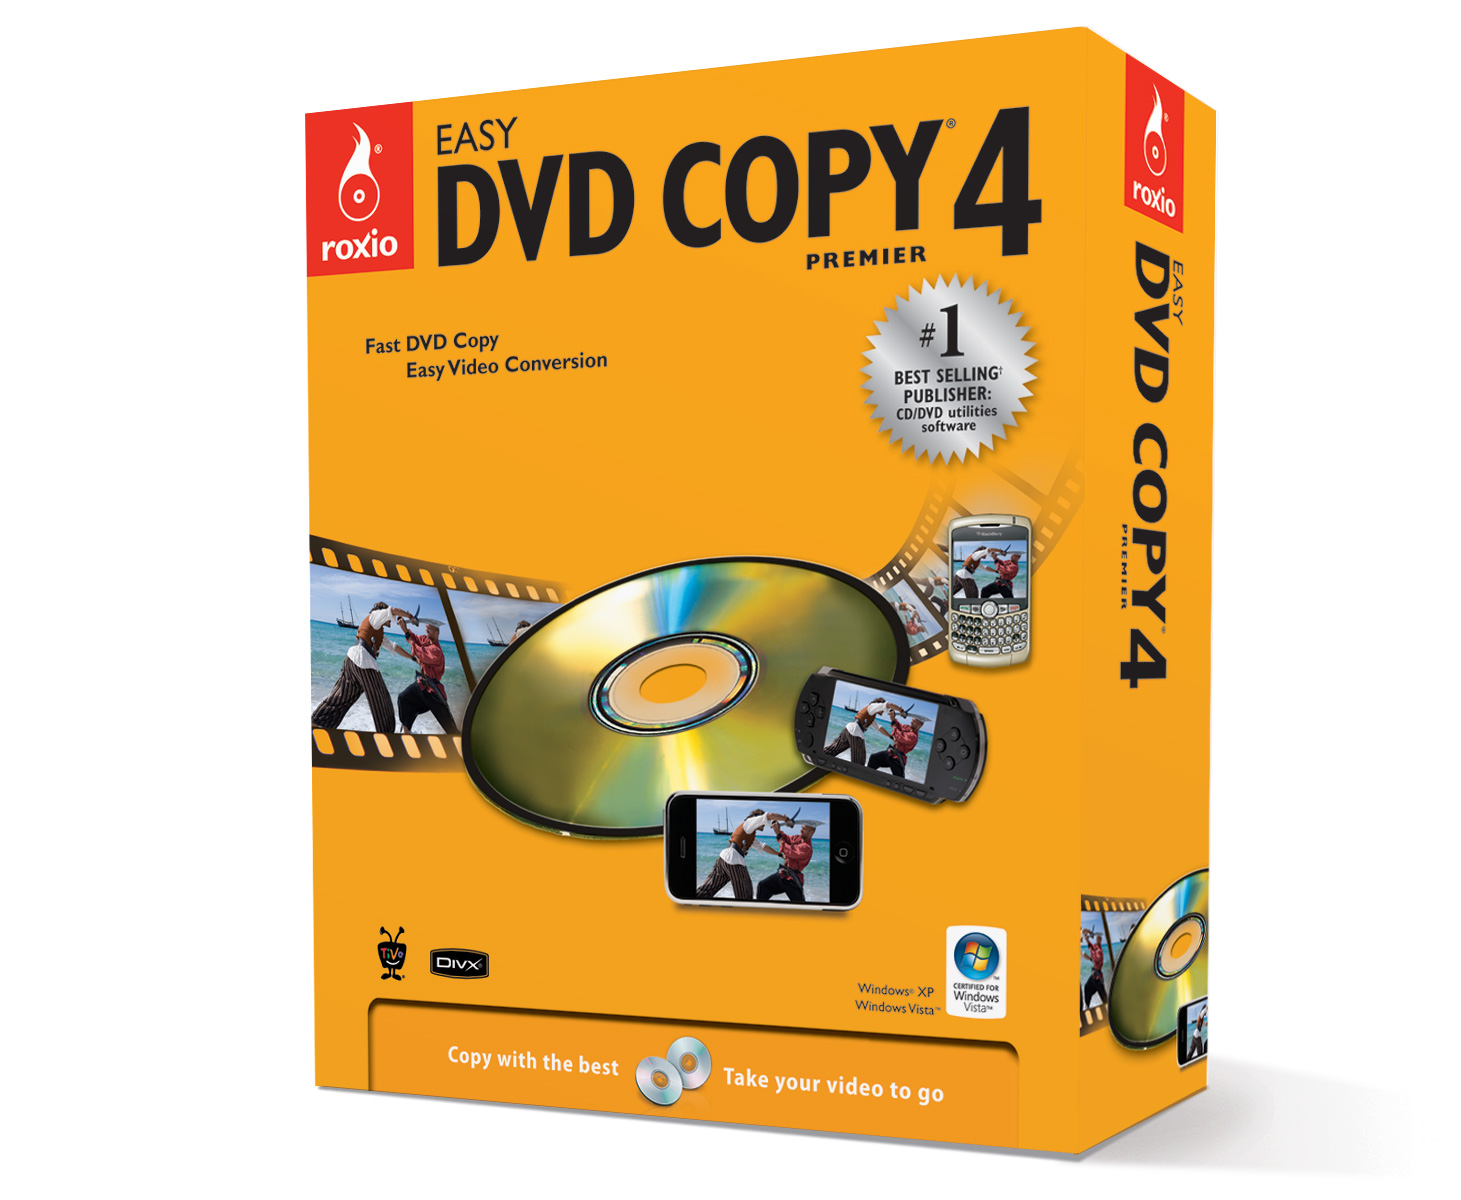 roxio dvd maker free